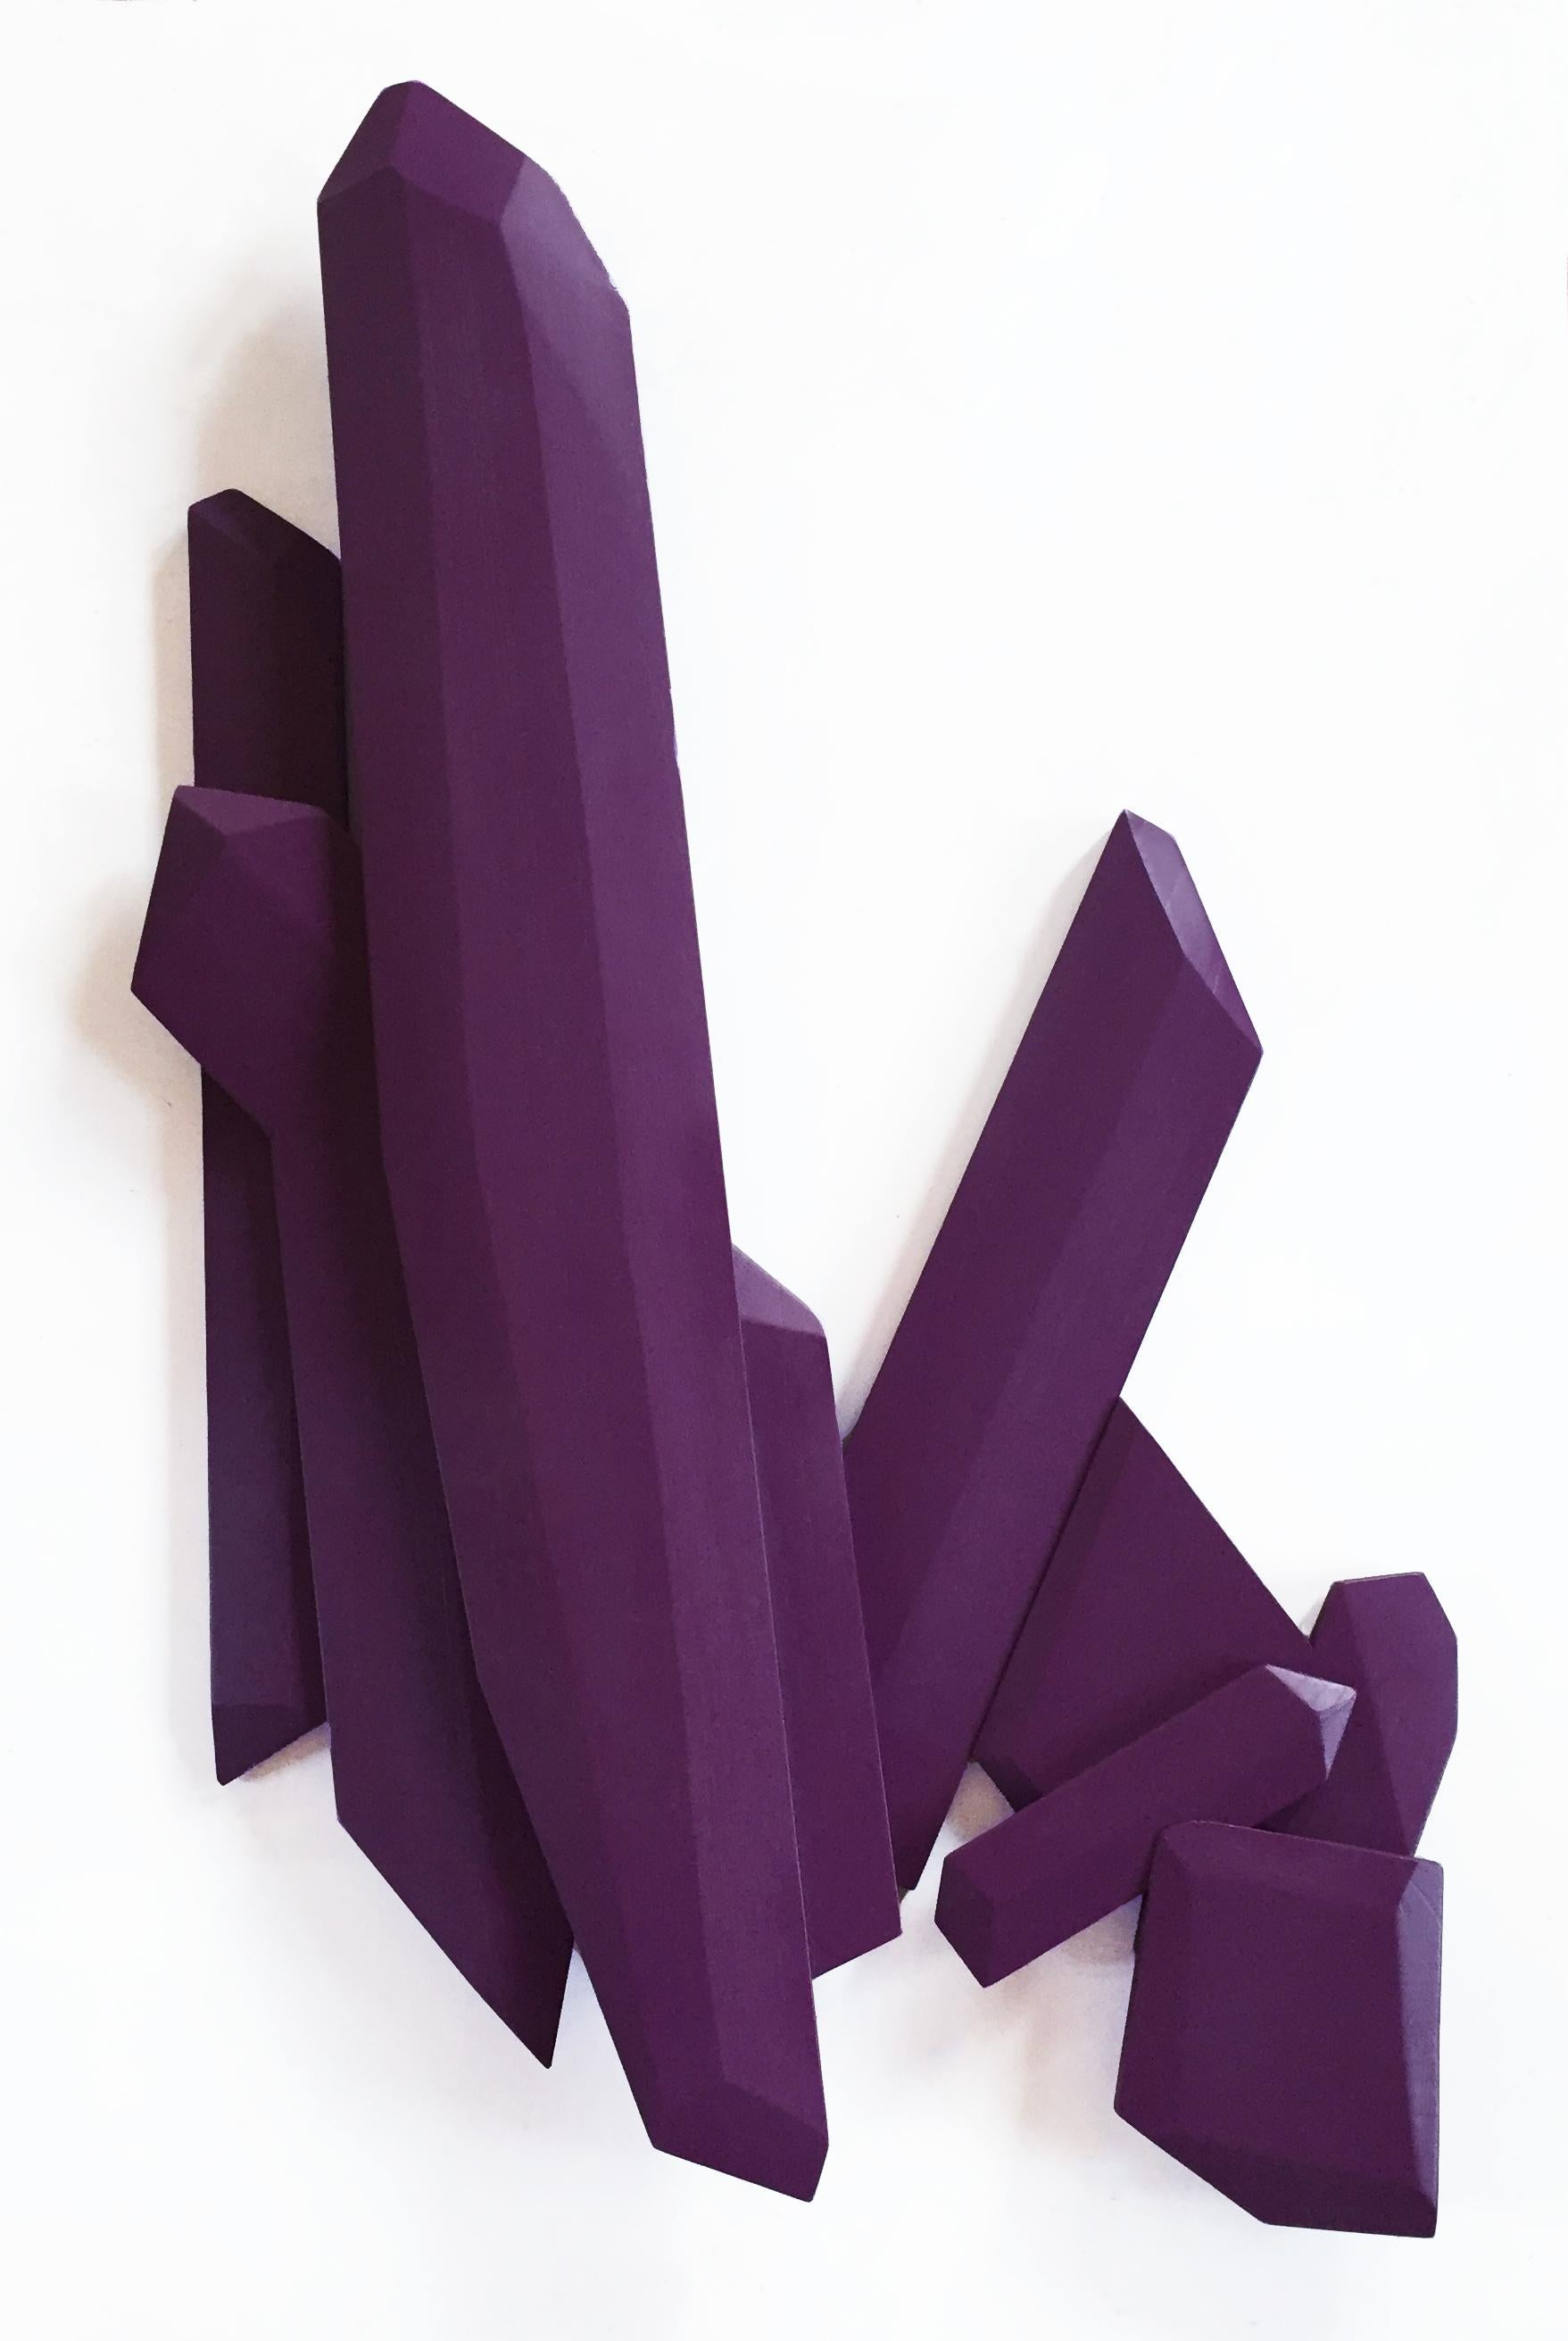 "Ultra Violet Crystals" Wall Sculpture Metallic, monochrome, mid century, purple - Mixed Media Art by Chloe Hedden